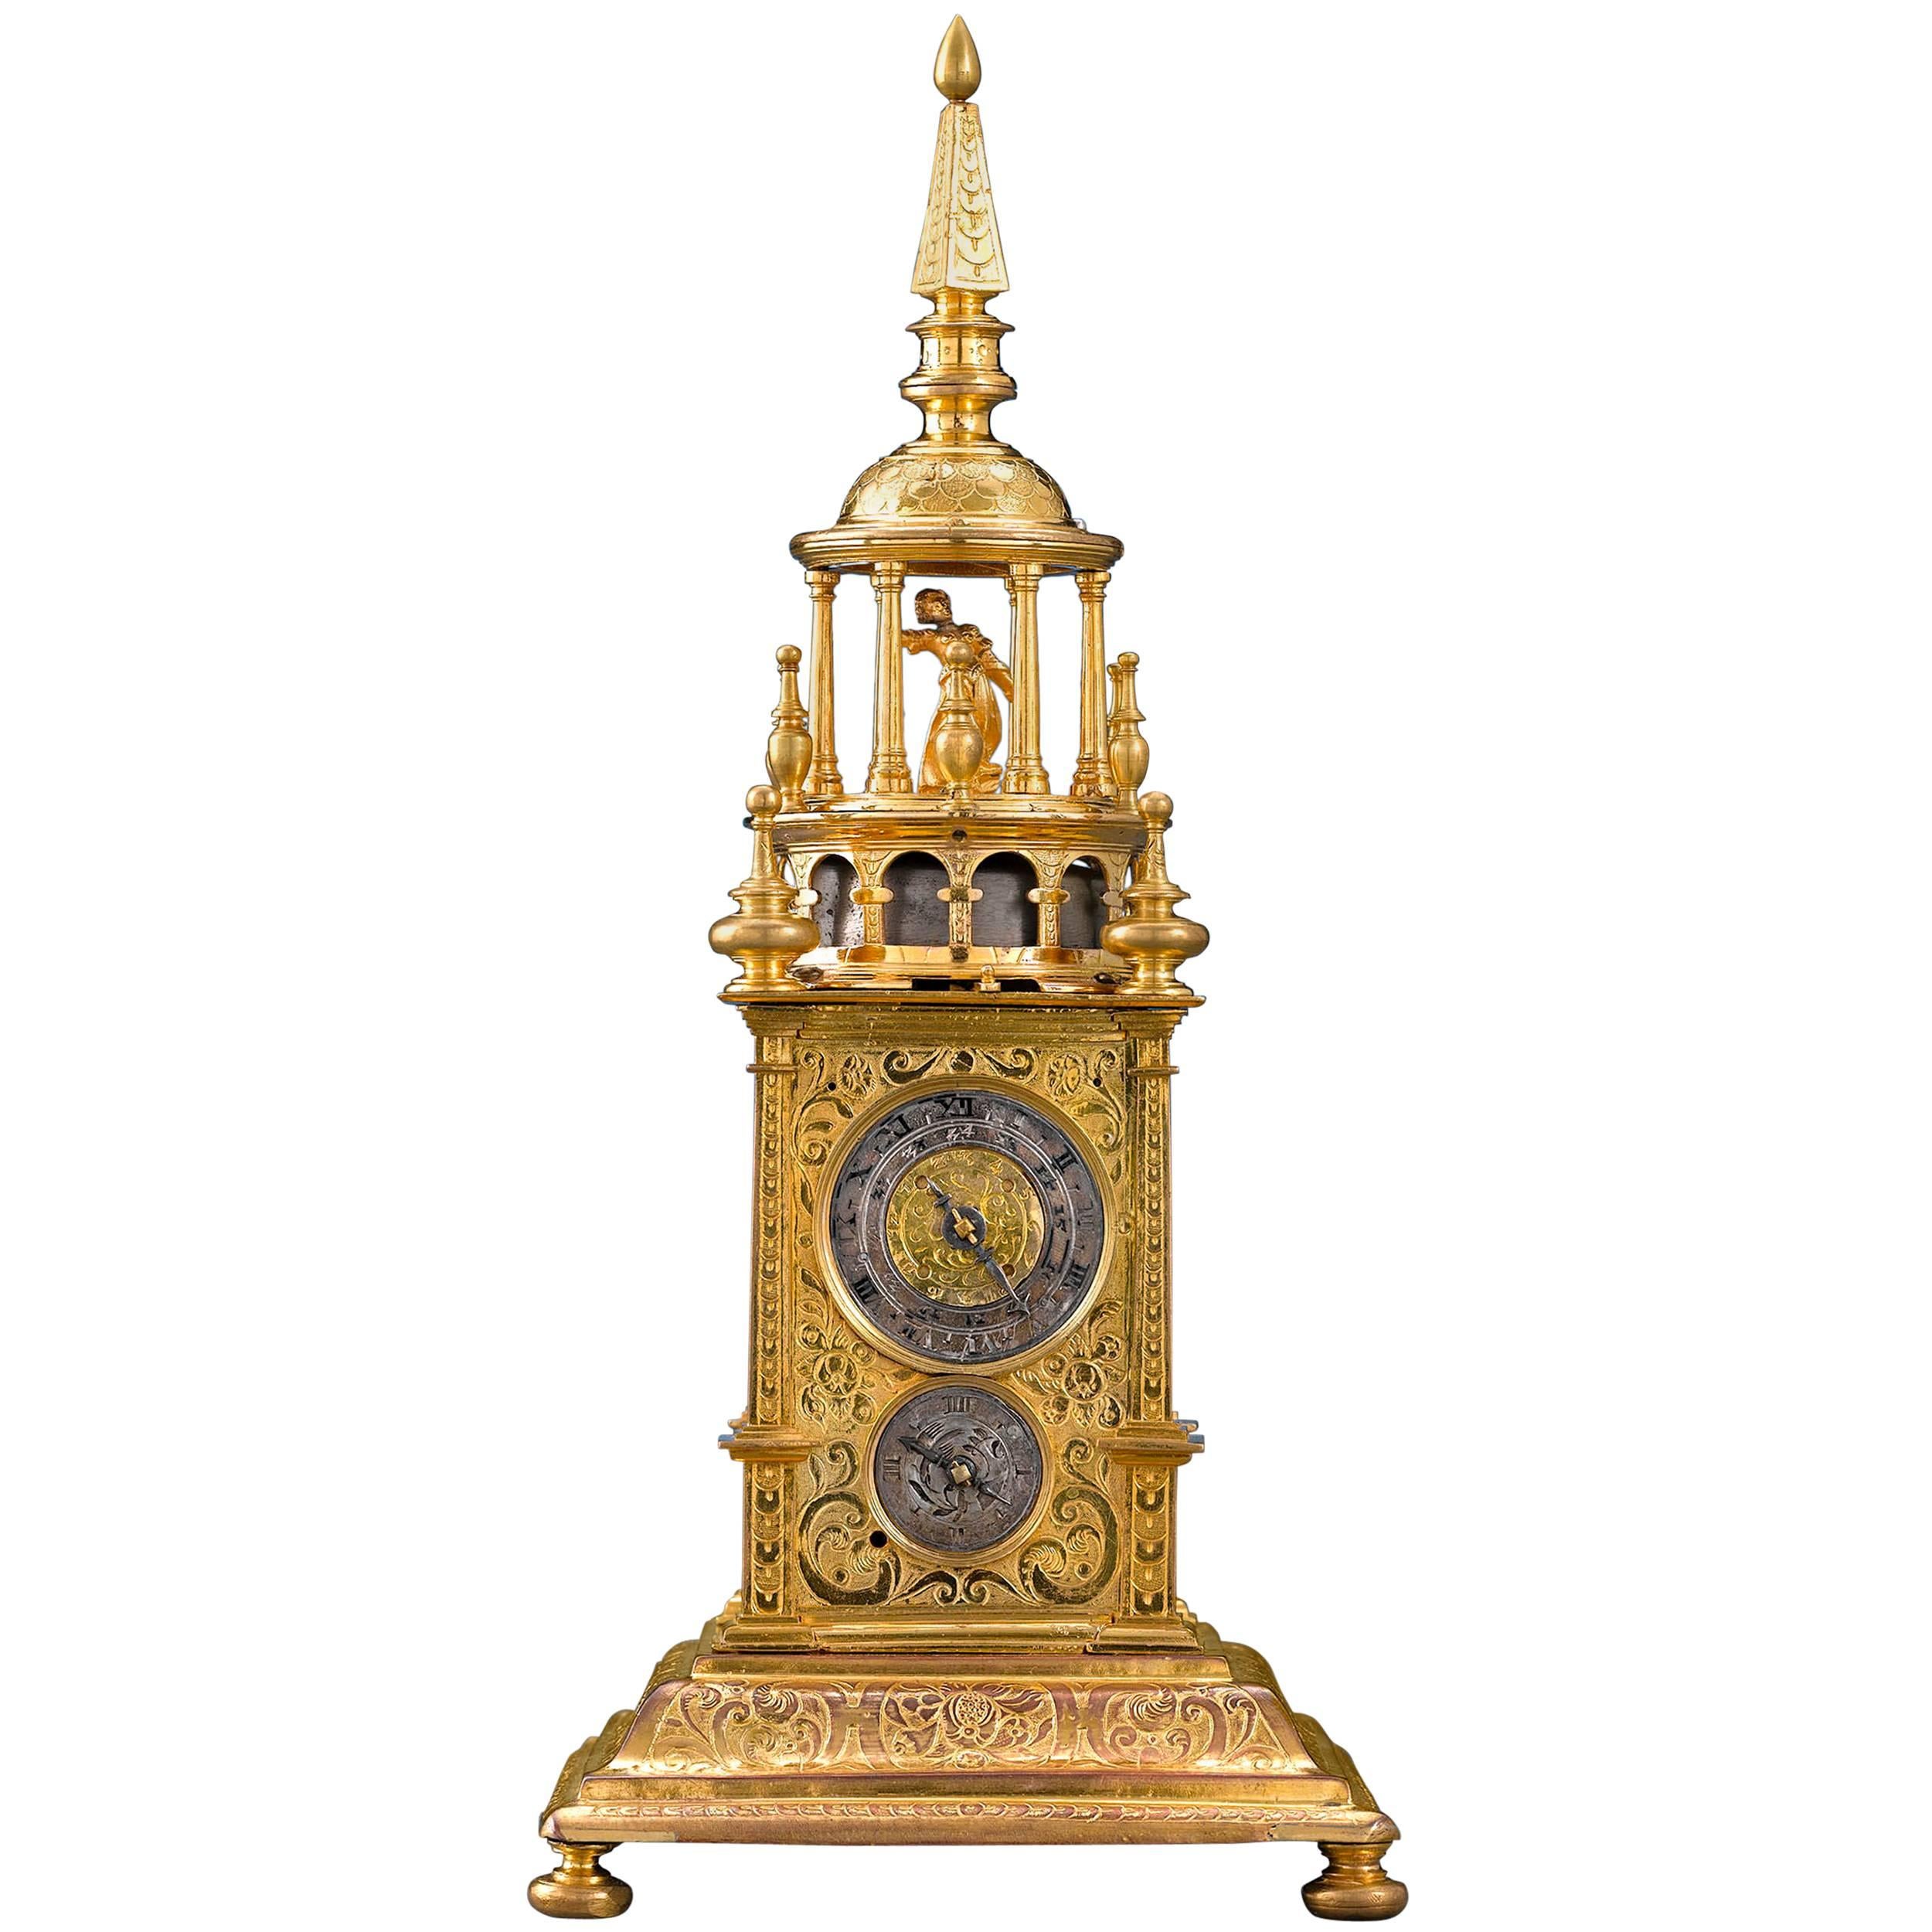 Renaissance Turret Clock, Early 17th Century